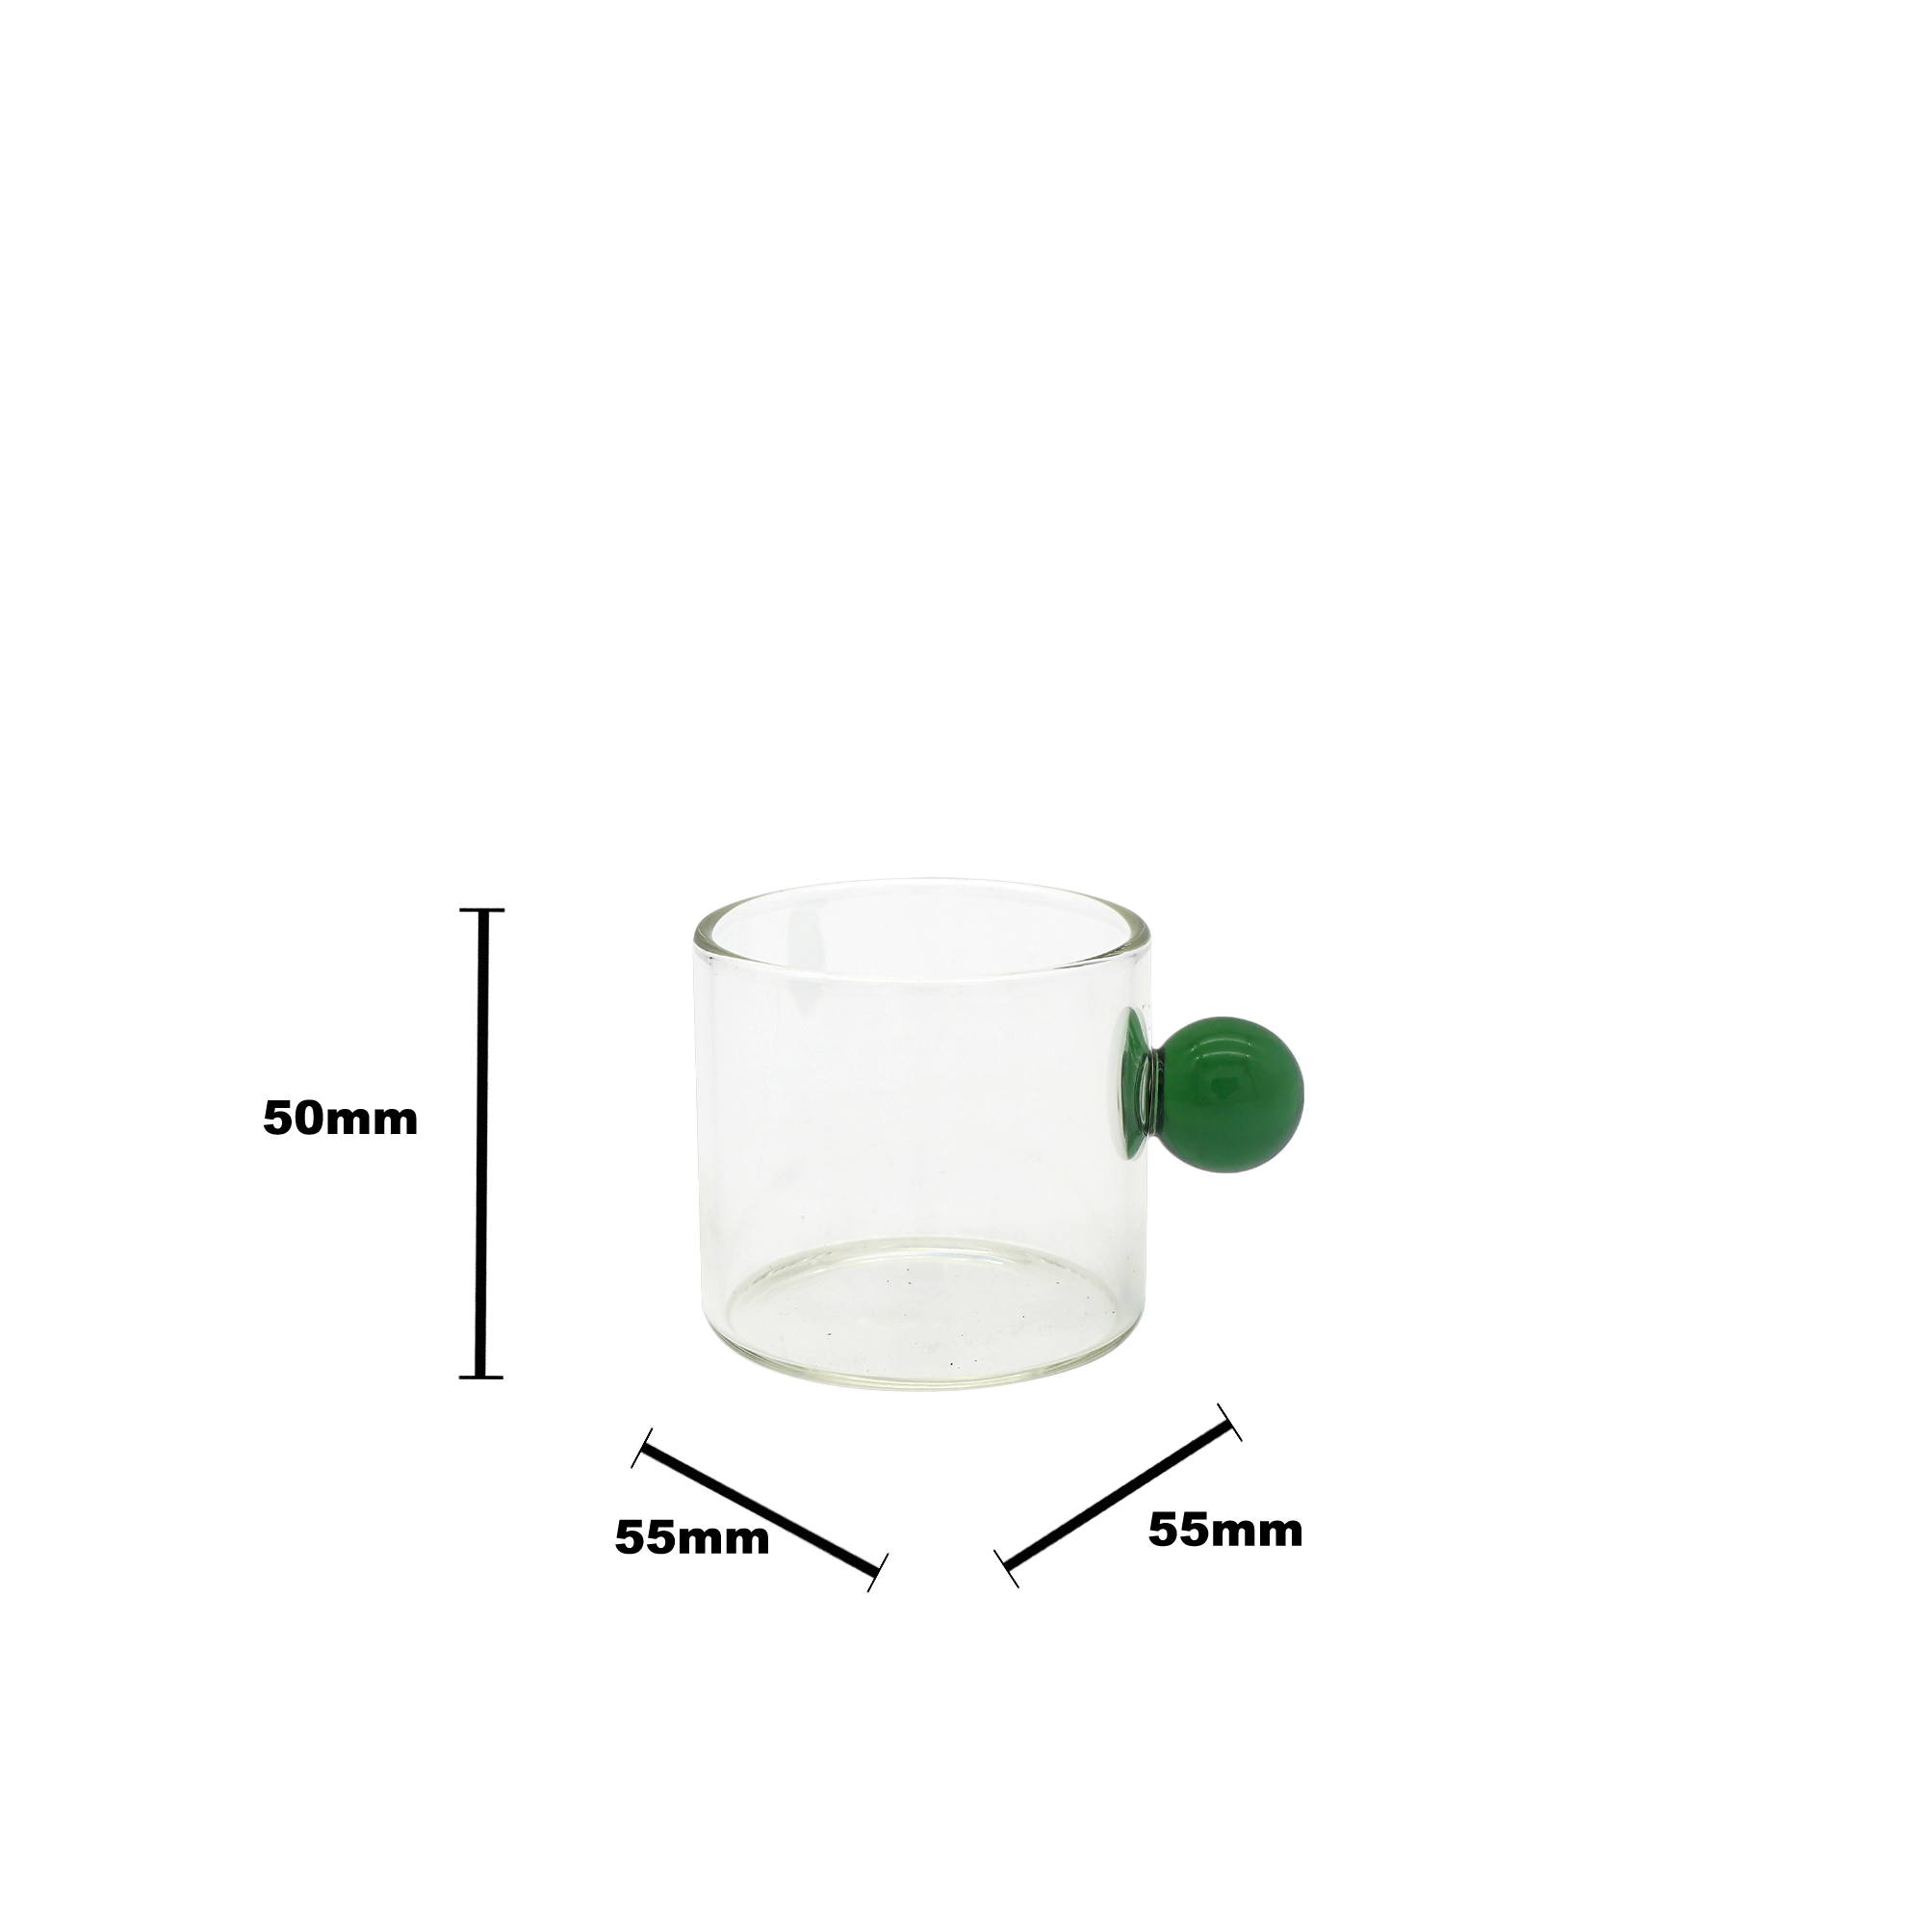 PomPon Mini Cup - 90ml green